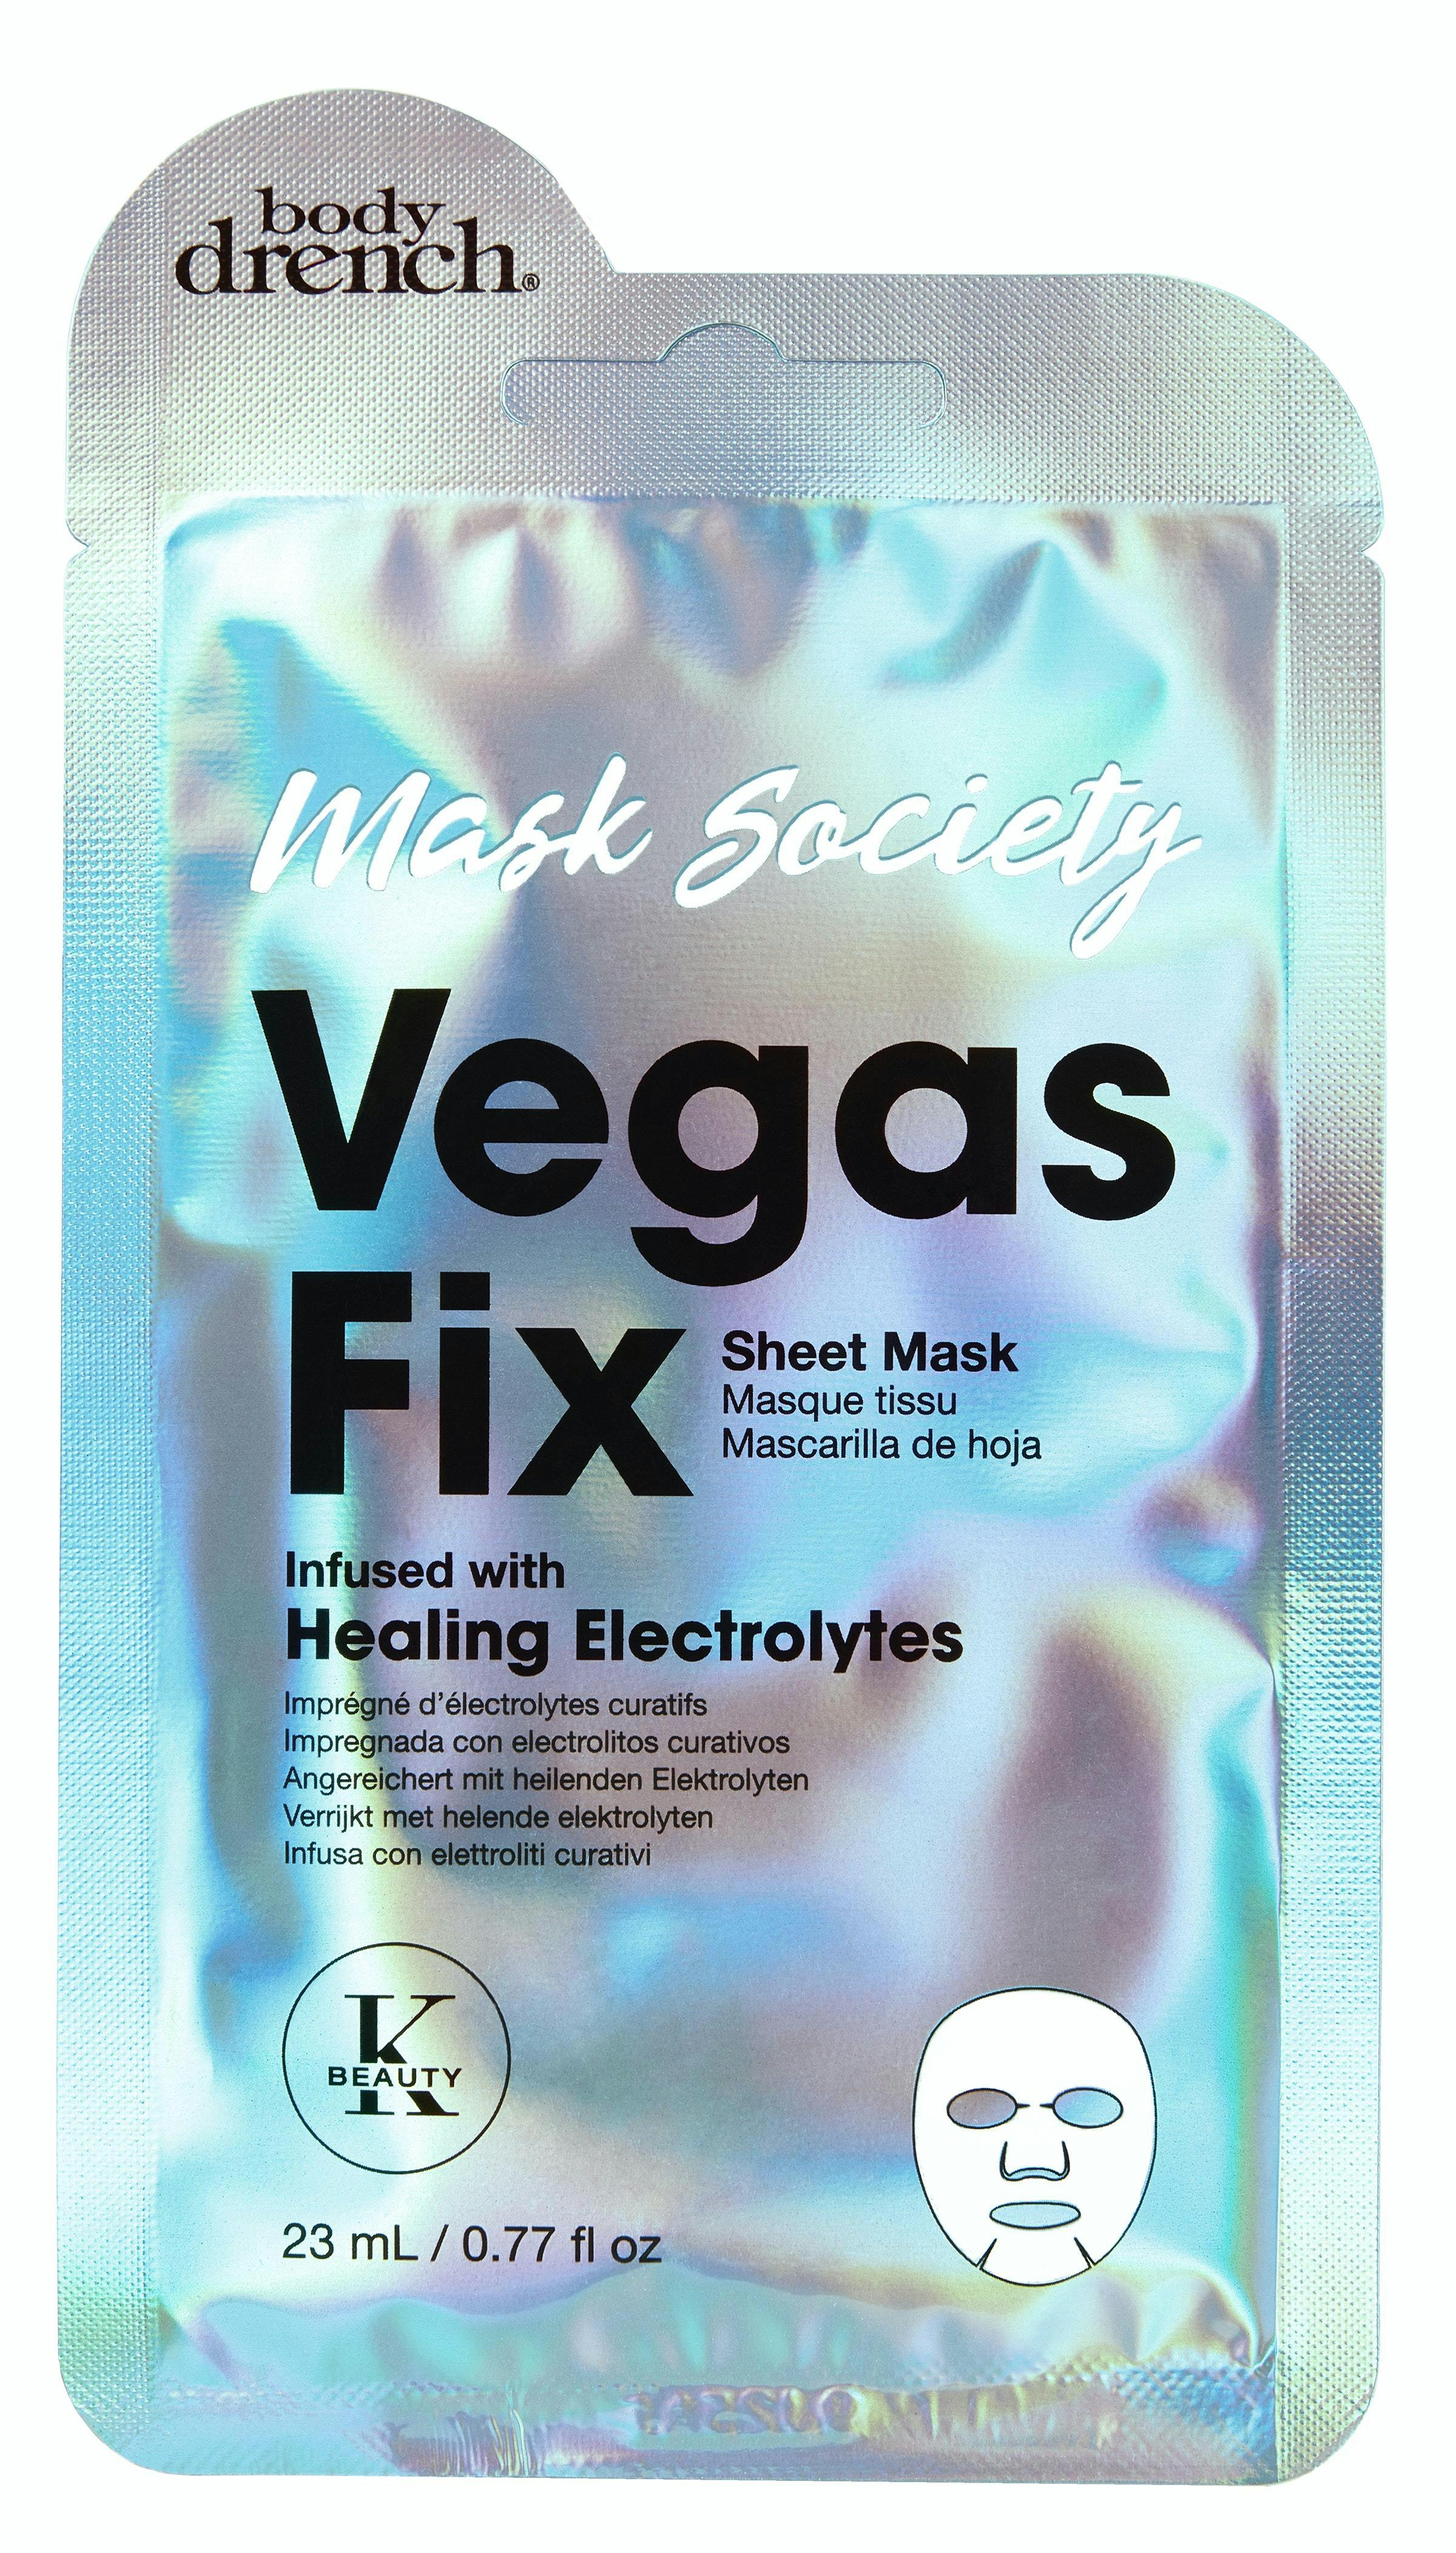 Mask Society VegasFix Sheet Mask 23ml